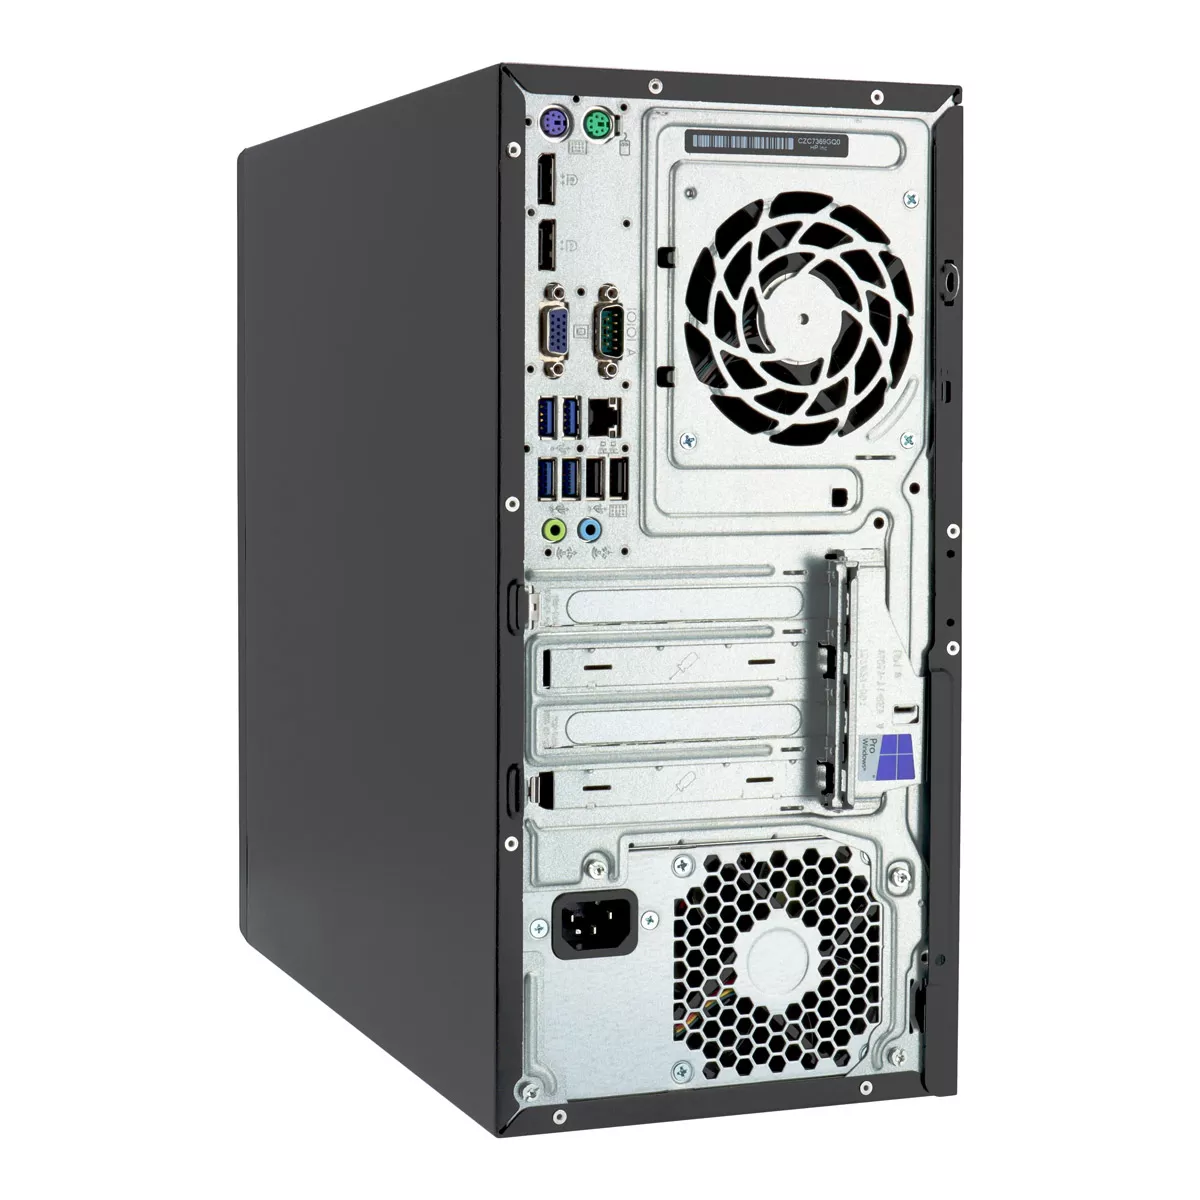 HP EliteDesk 705 G3 MT AMD Pro A10-8770 R7 240 GB SSD A+